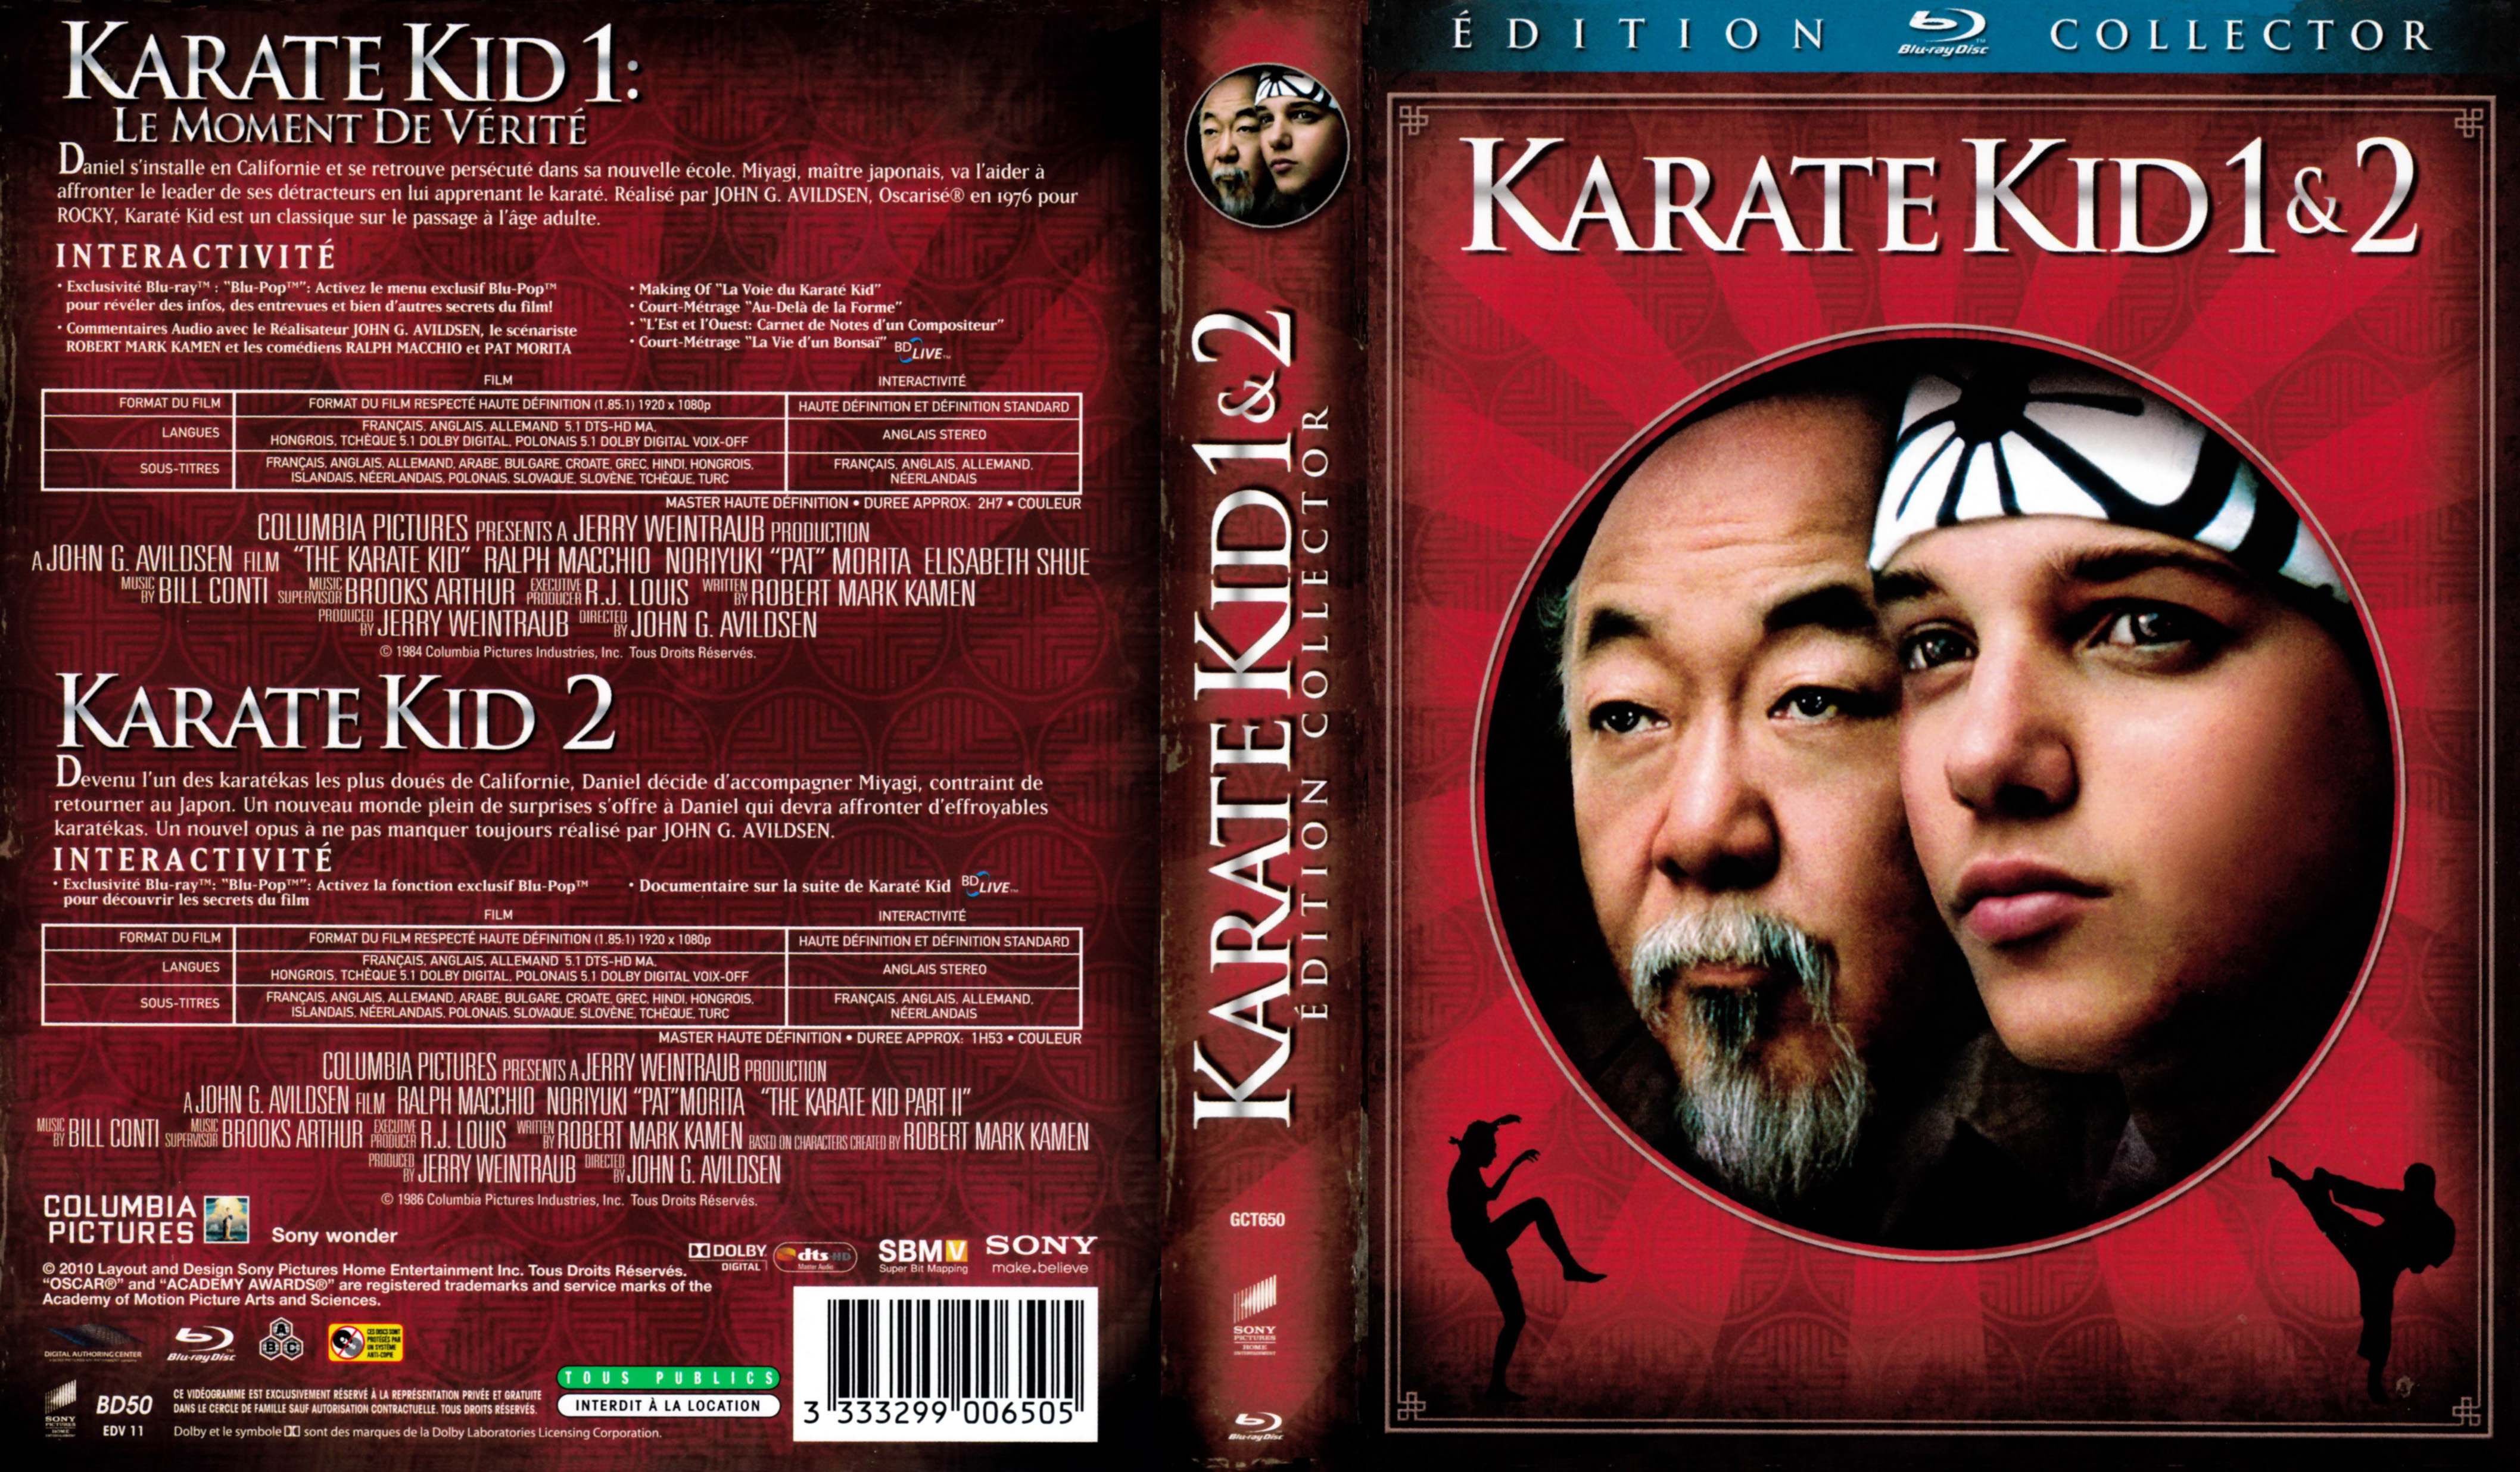 Jaquette DVD Karate kid 1 et 2 (BLU-RAY)